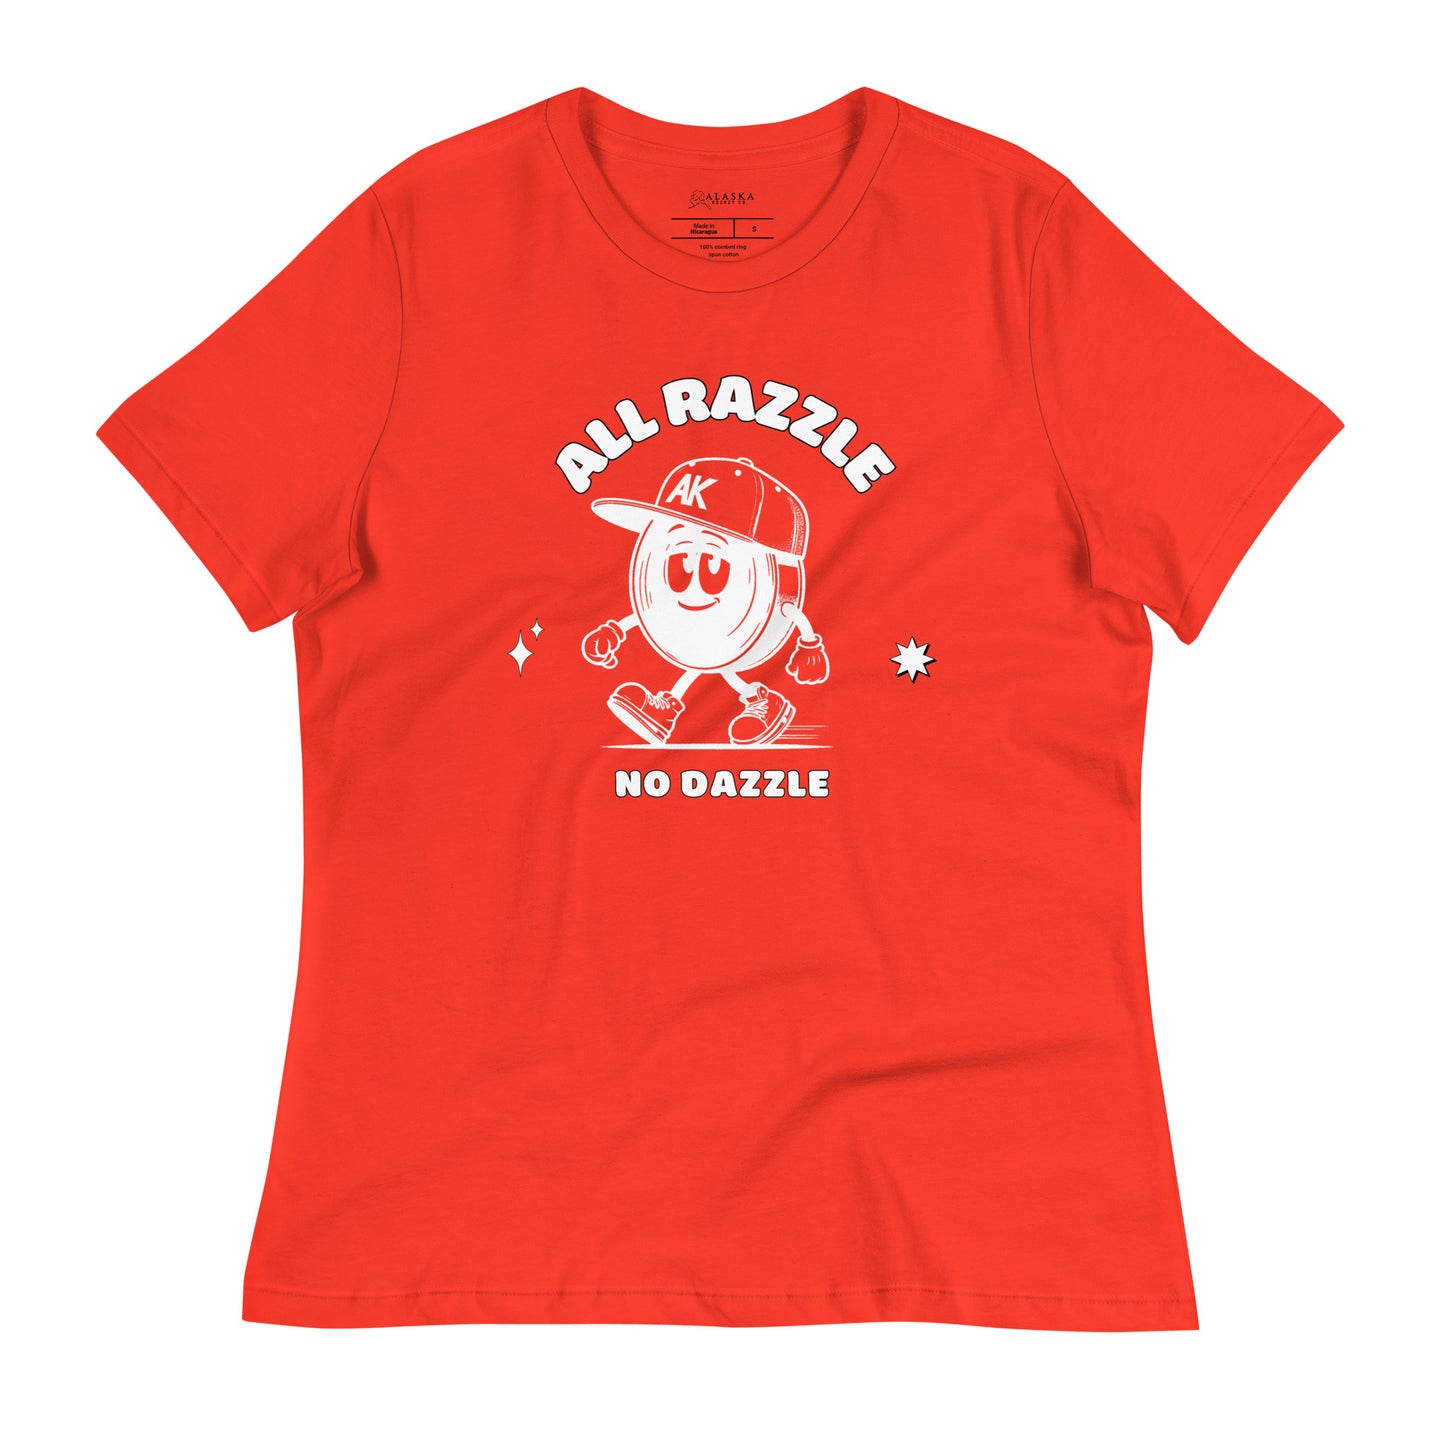 Razzle Dazzle Women's Relaxed T-Shirt